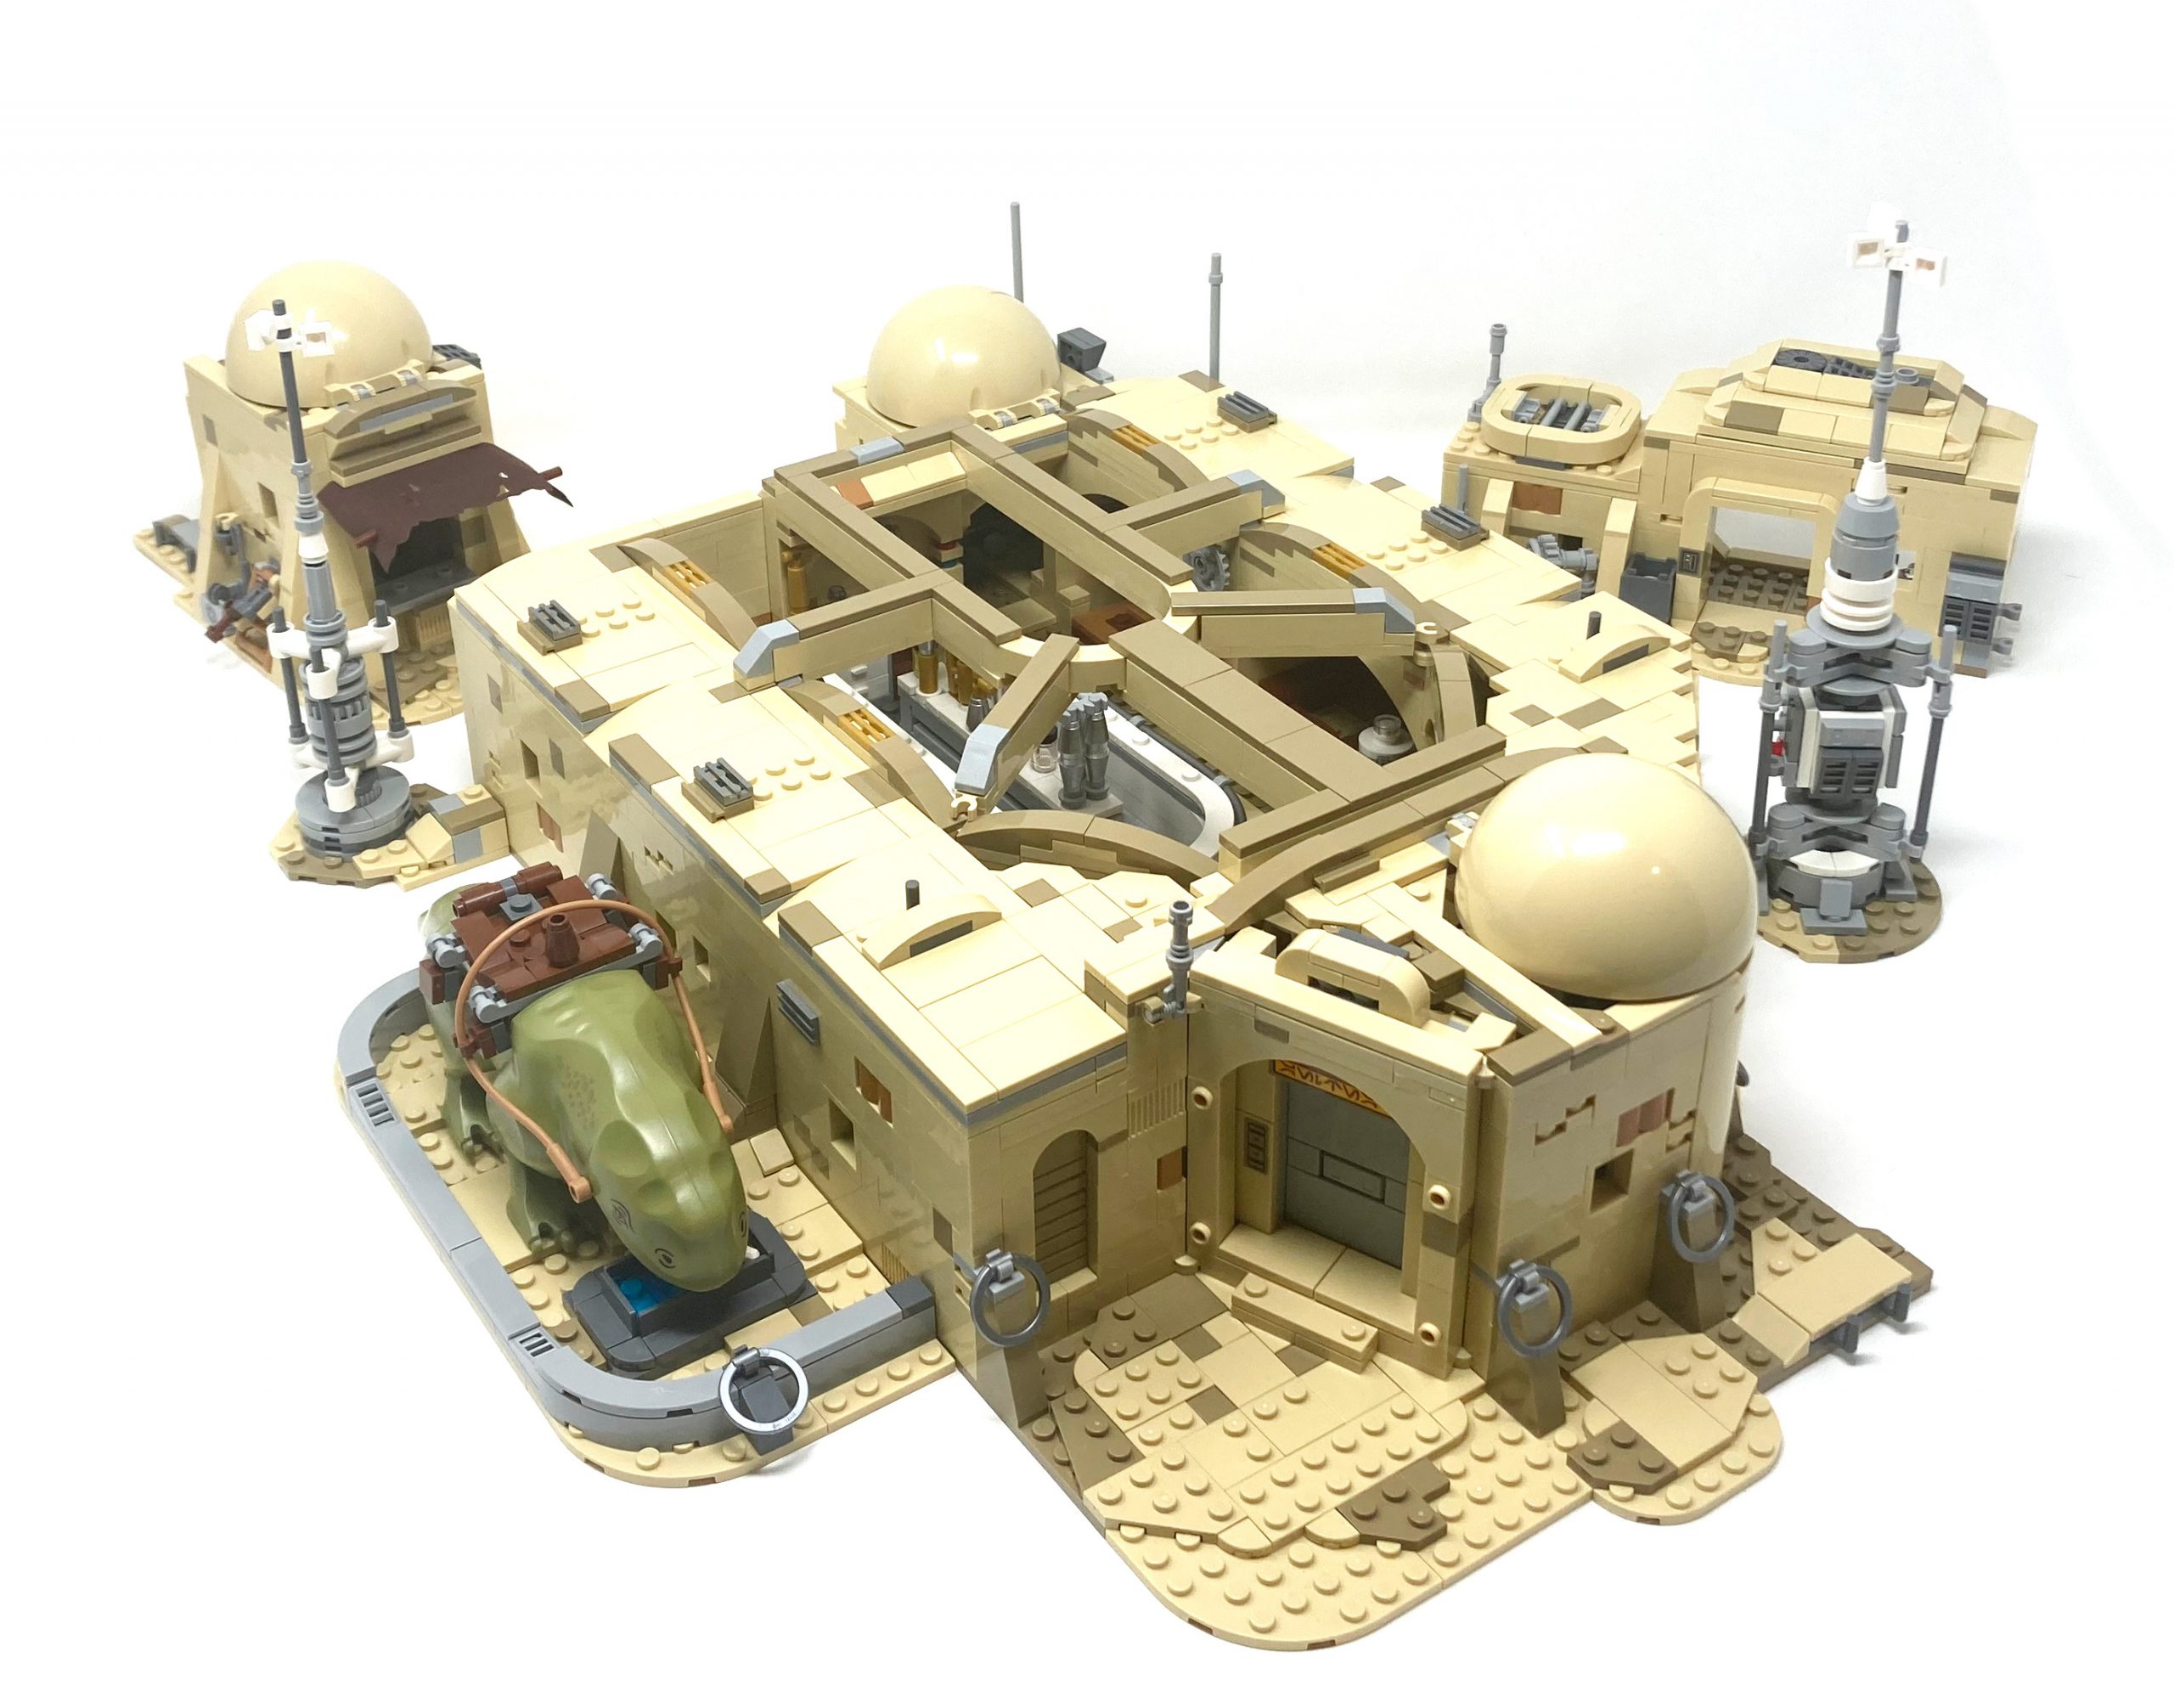 LEGO Star Wars 75052 Mos Eisley Cantina review! Summer 2014 